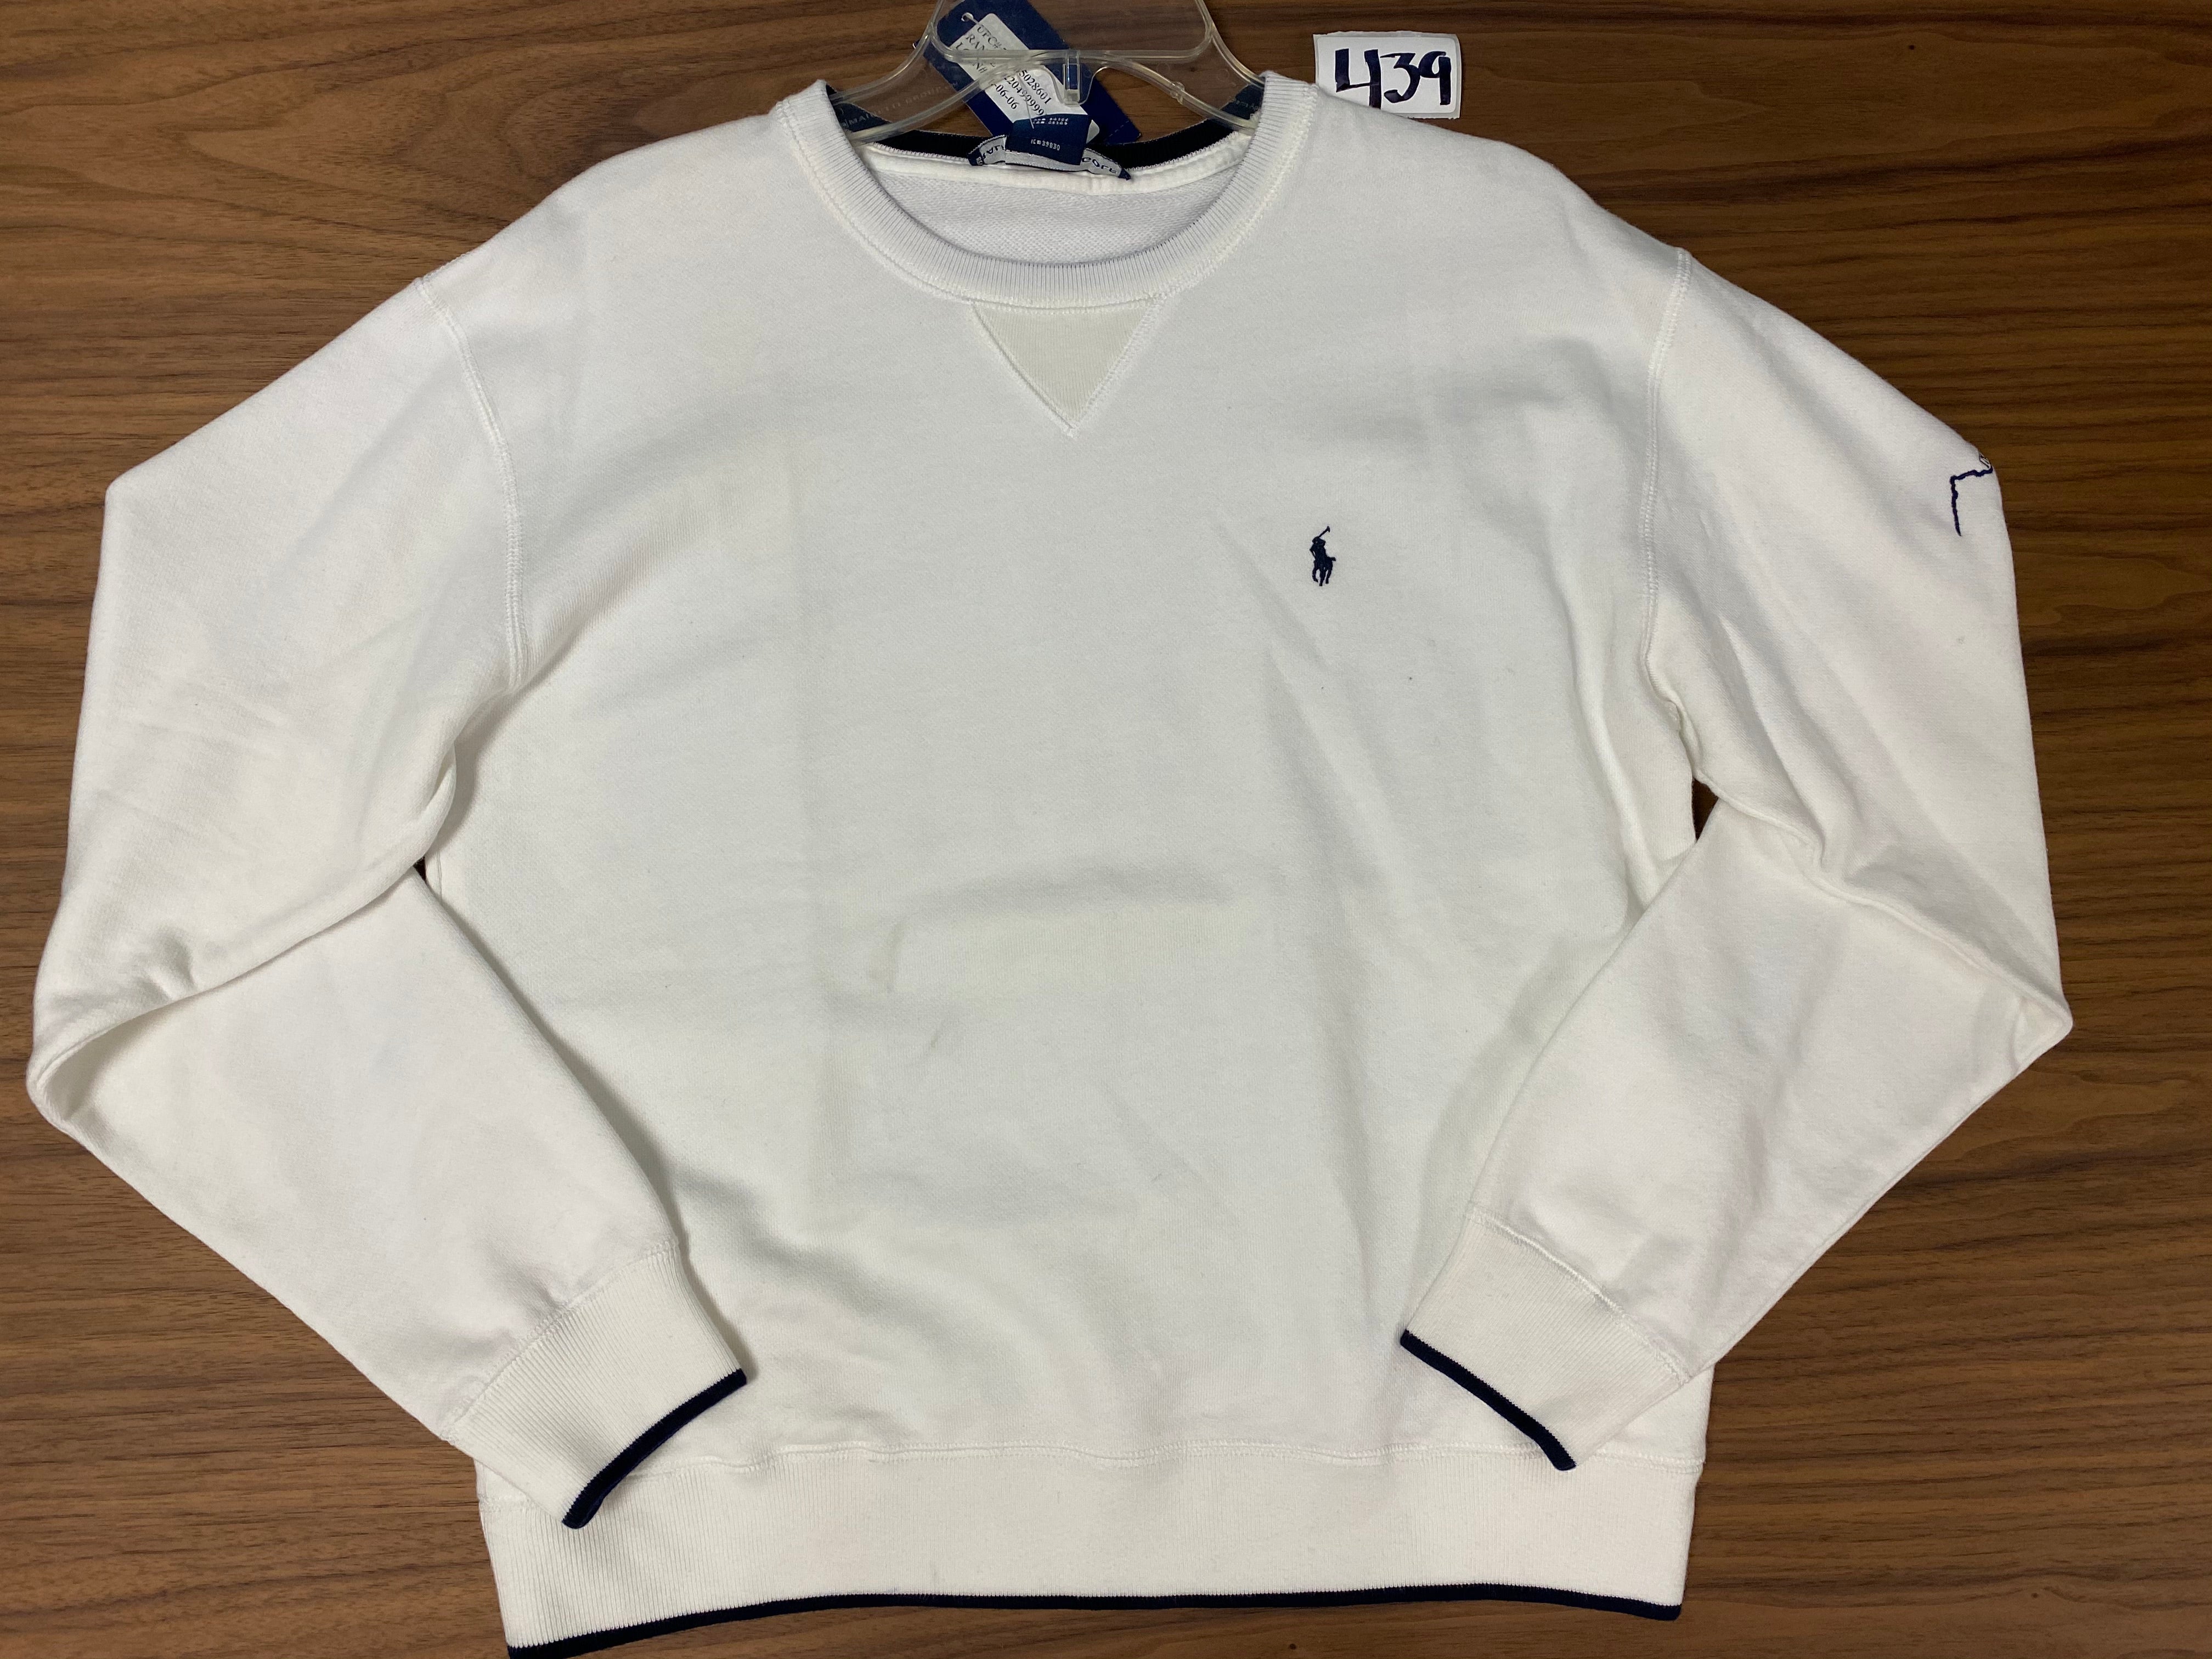 Ralph Lauren Golf Crew Neck Sweatshirt - White